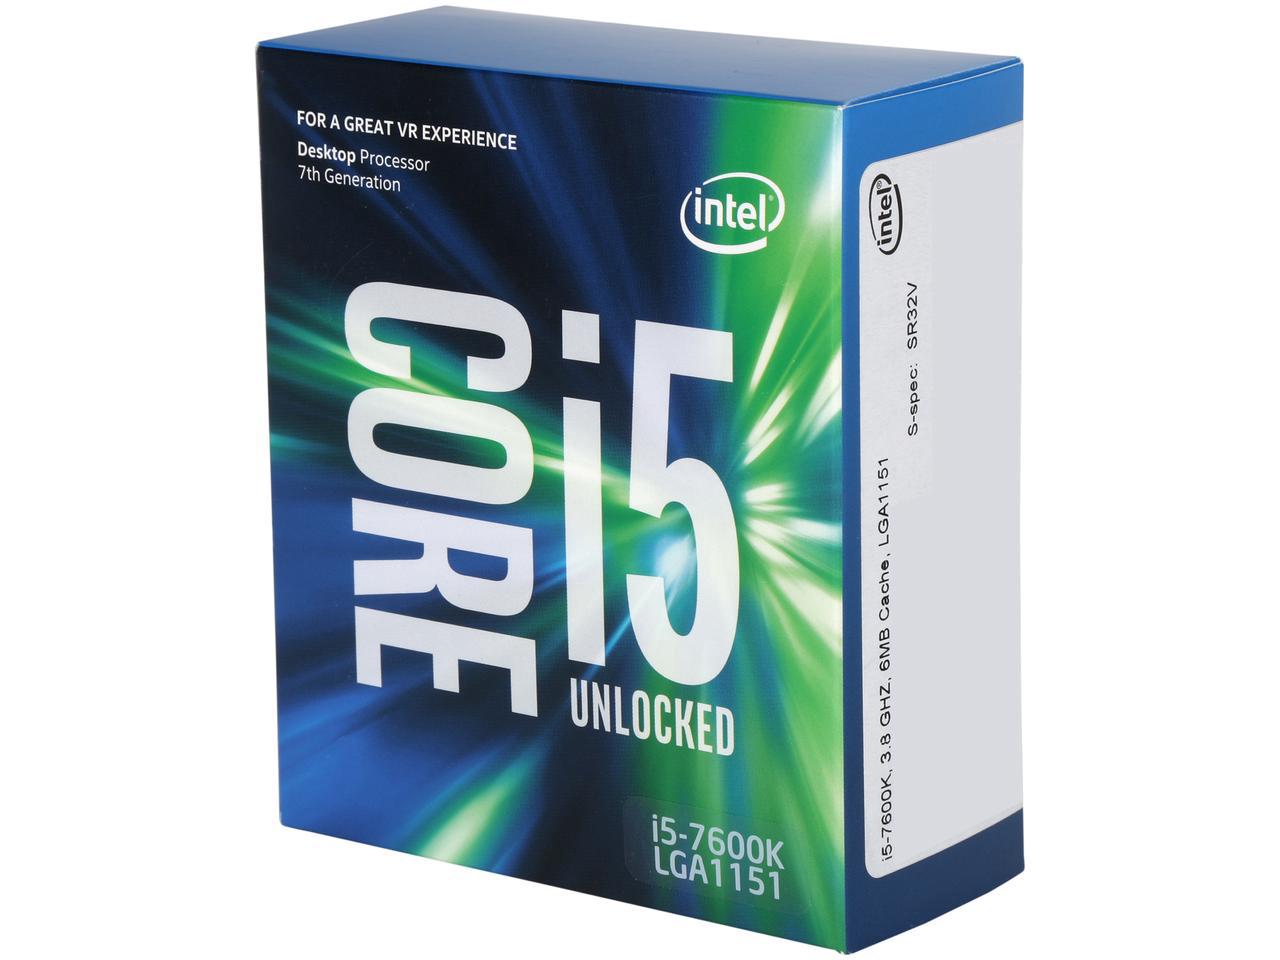 Intel Core i5-7600K Kaby Lake CPU box